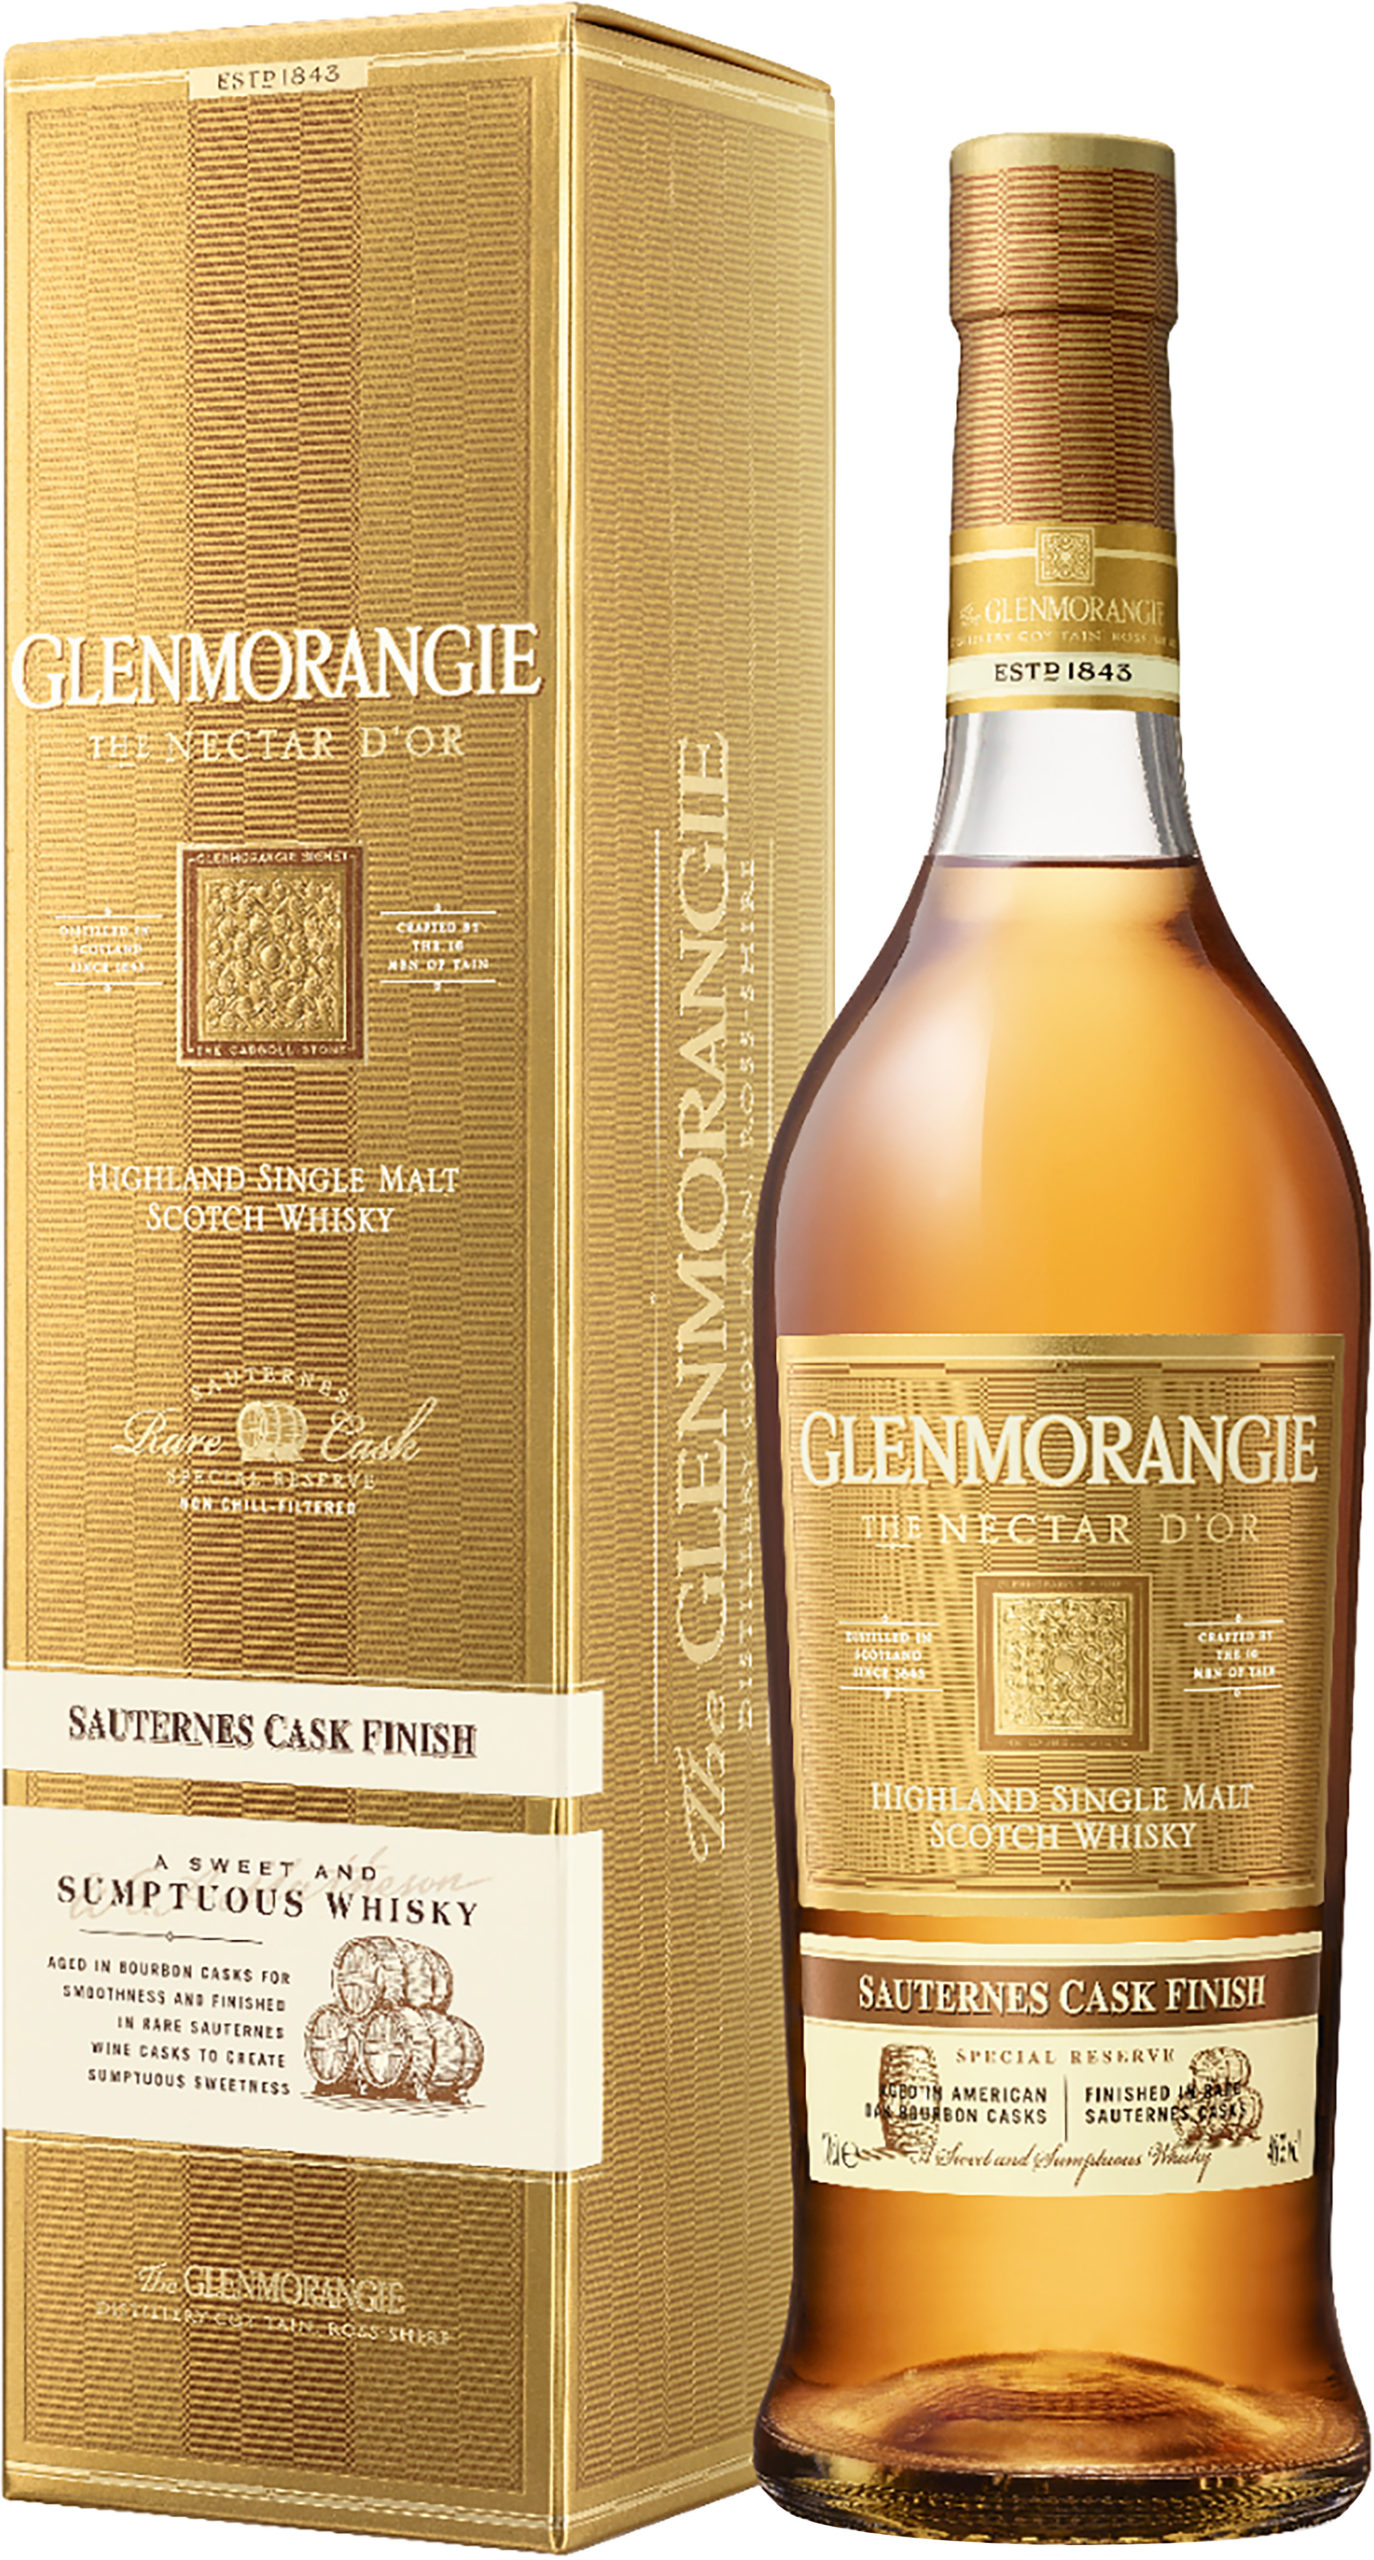 Glenmorangie Nectar D’or Single Malt